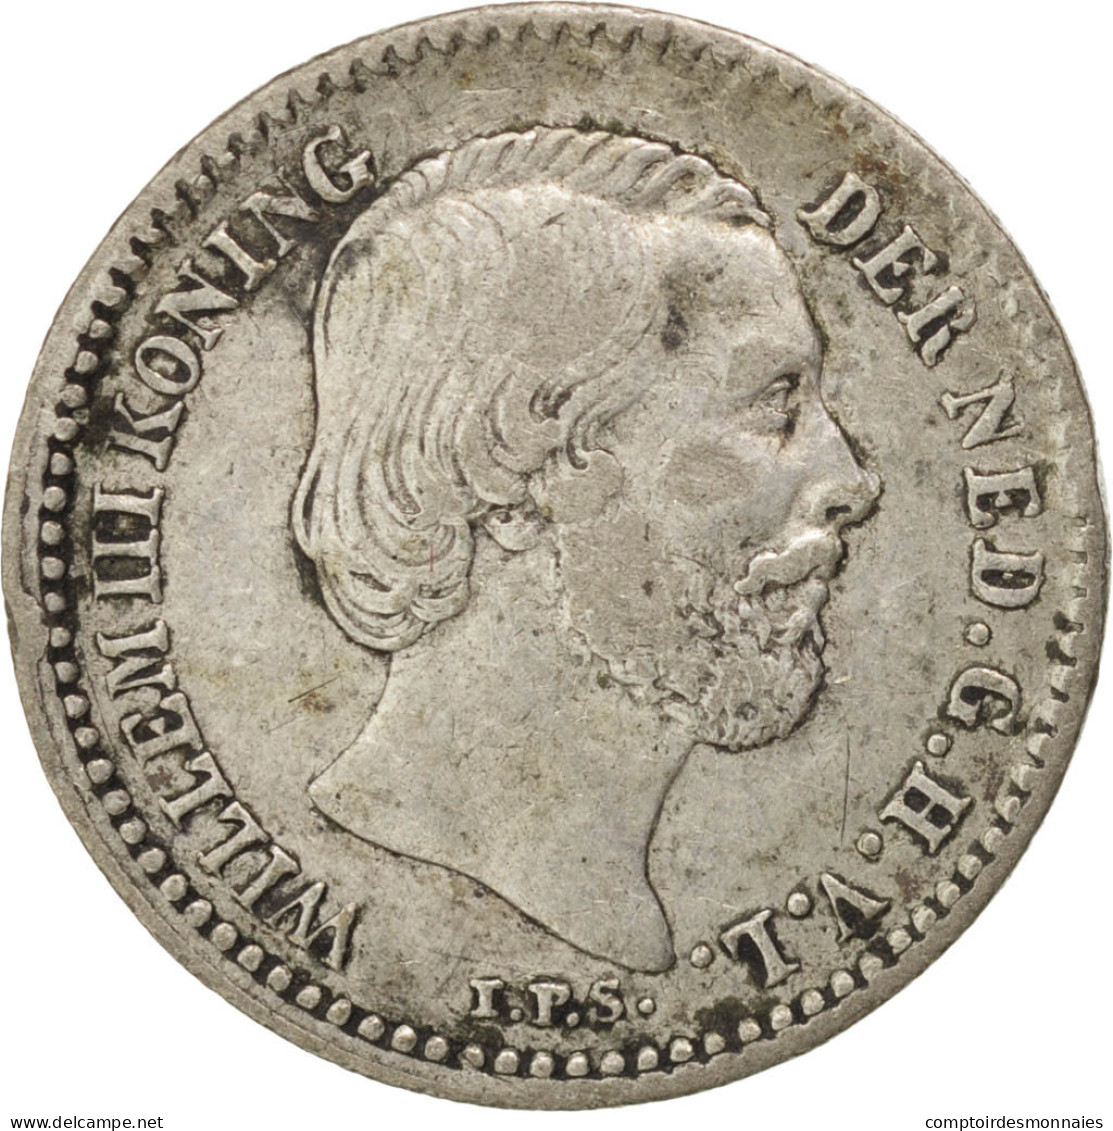 Monnaie, Pays-Bas, William III, 10 Cents, 1887, TTB, Argent, KM:80 - 1849-1890 : Willem III